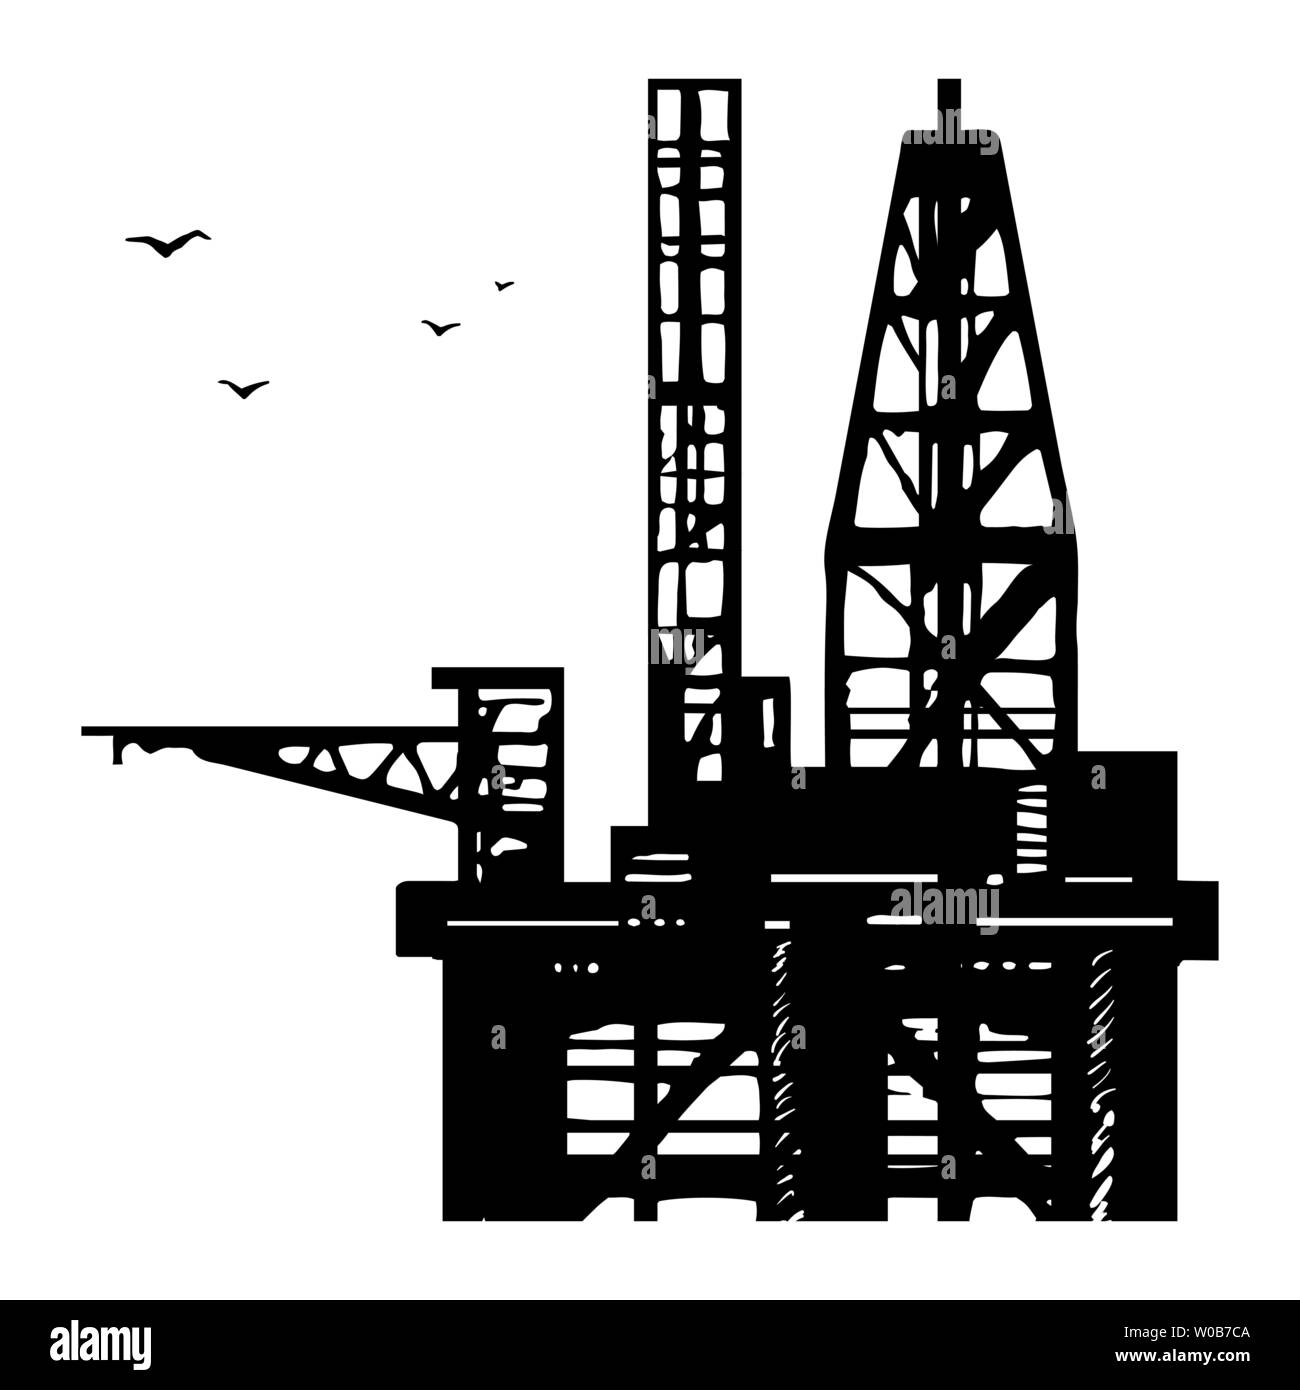 Platform drilling offshore oil. Stock Vector